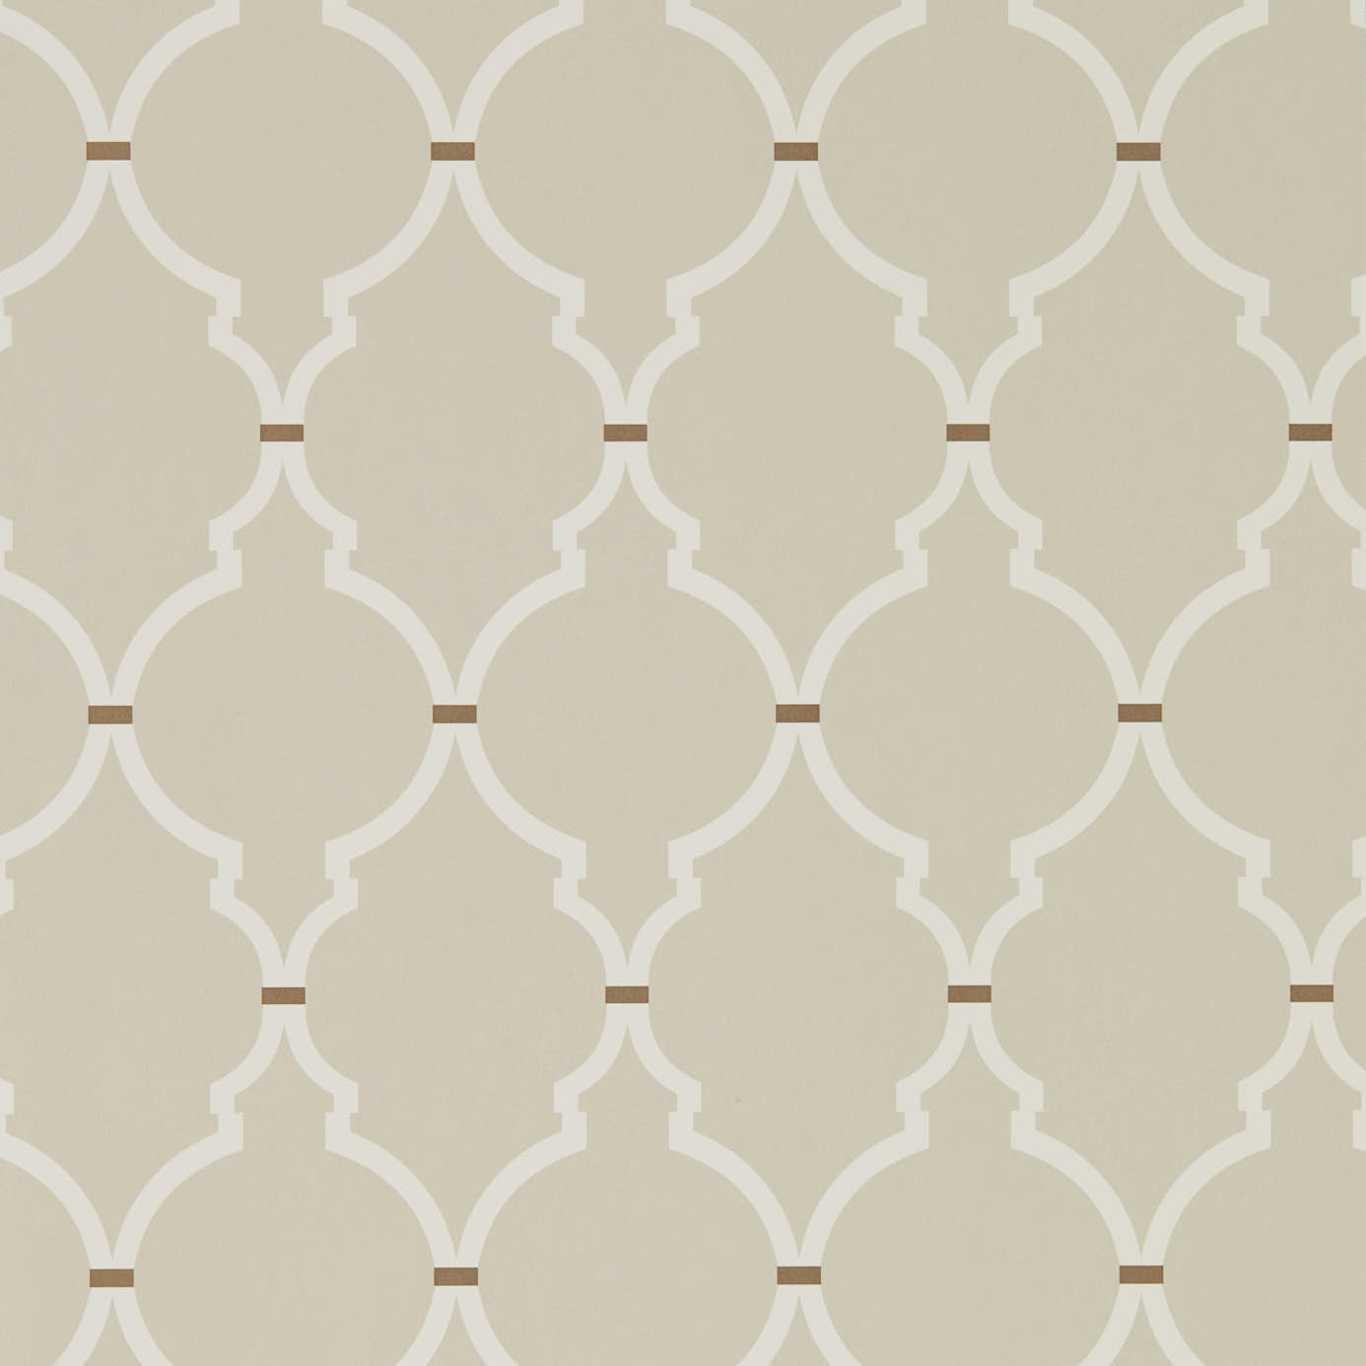 Empire Trellis Linen/Cream Wallpaper DART216337 by Sanderson